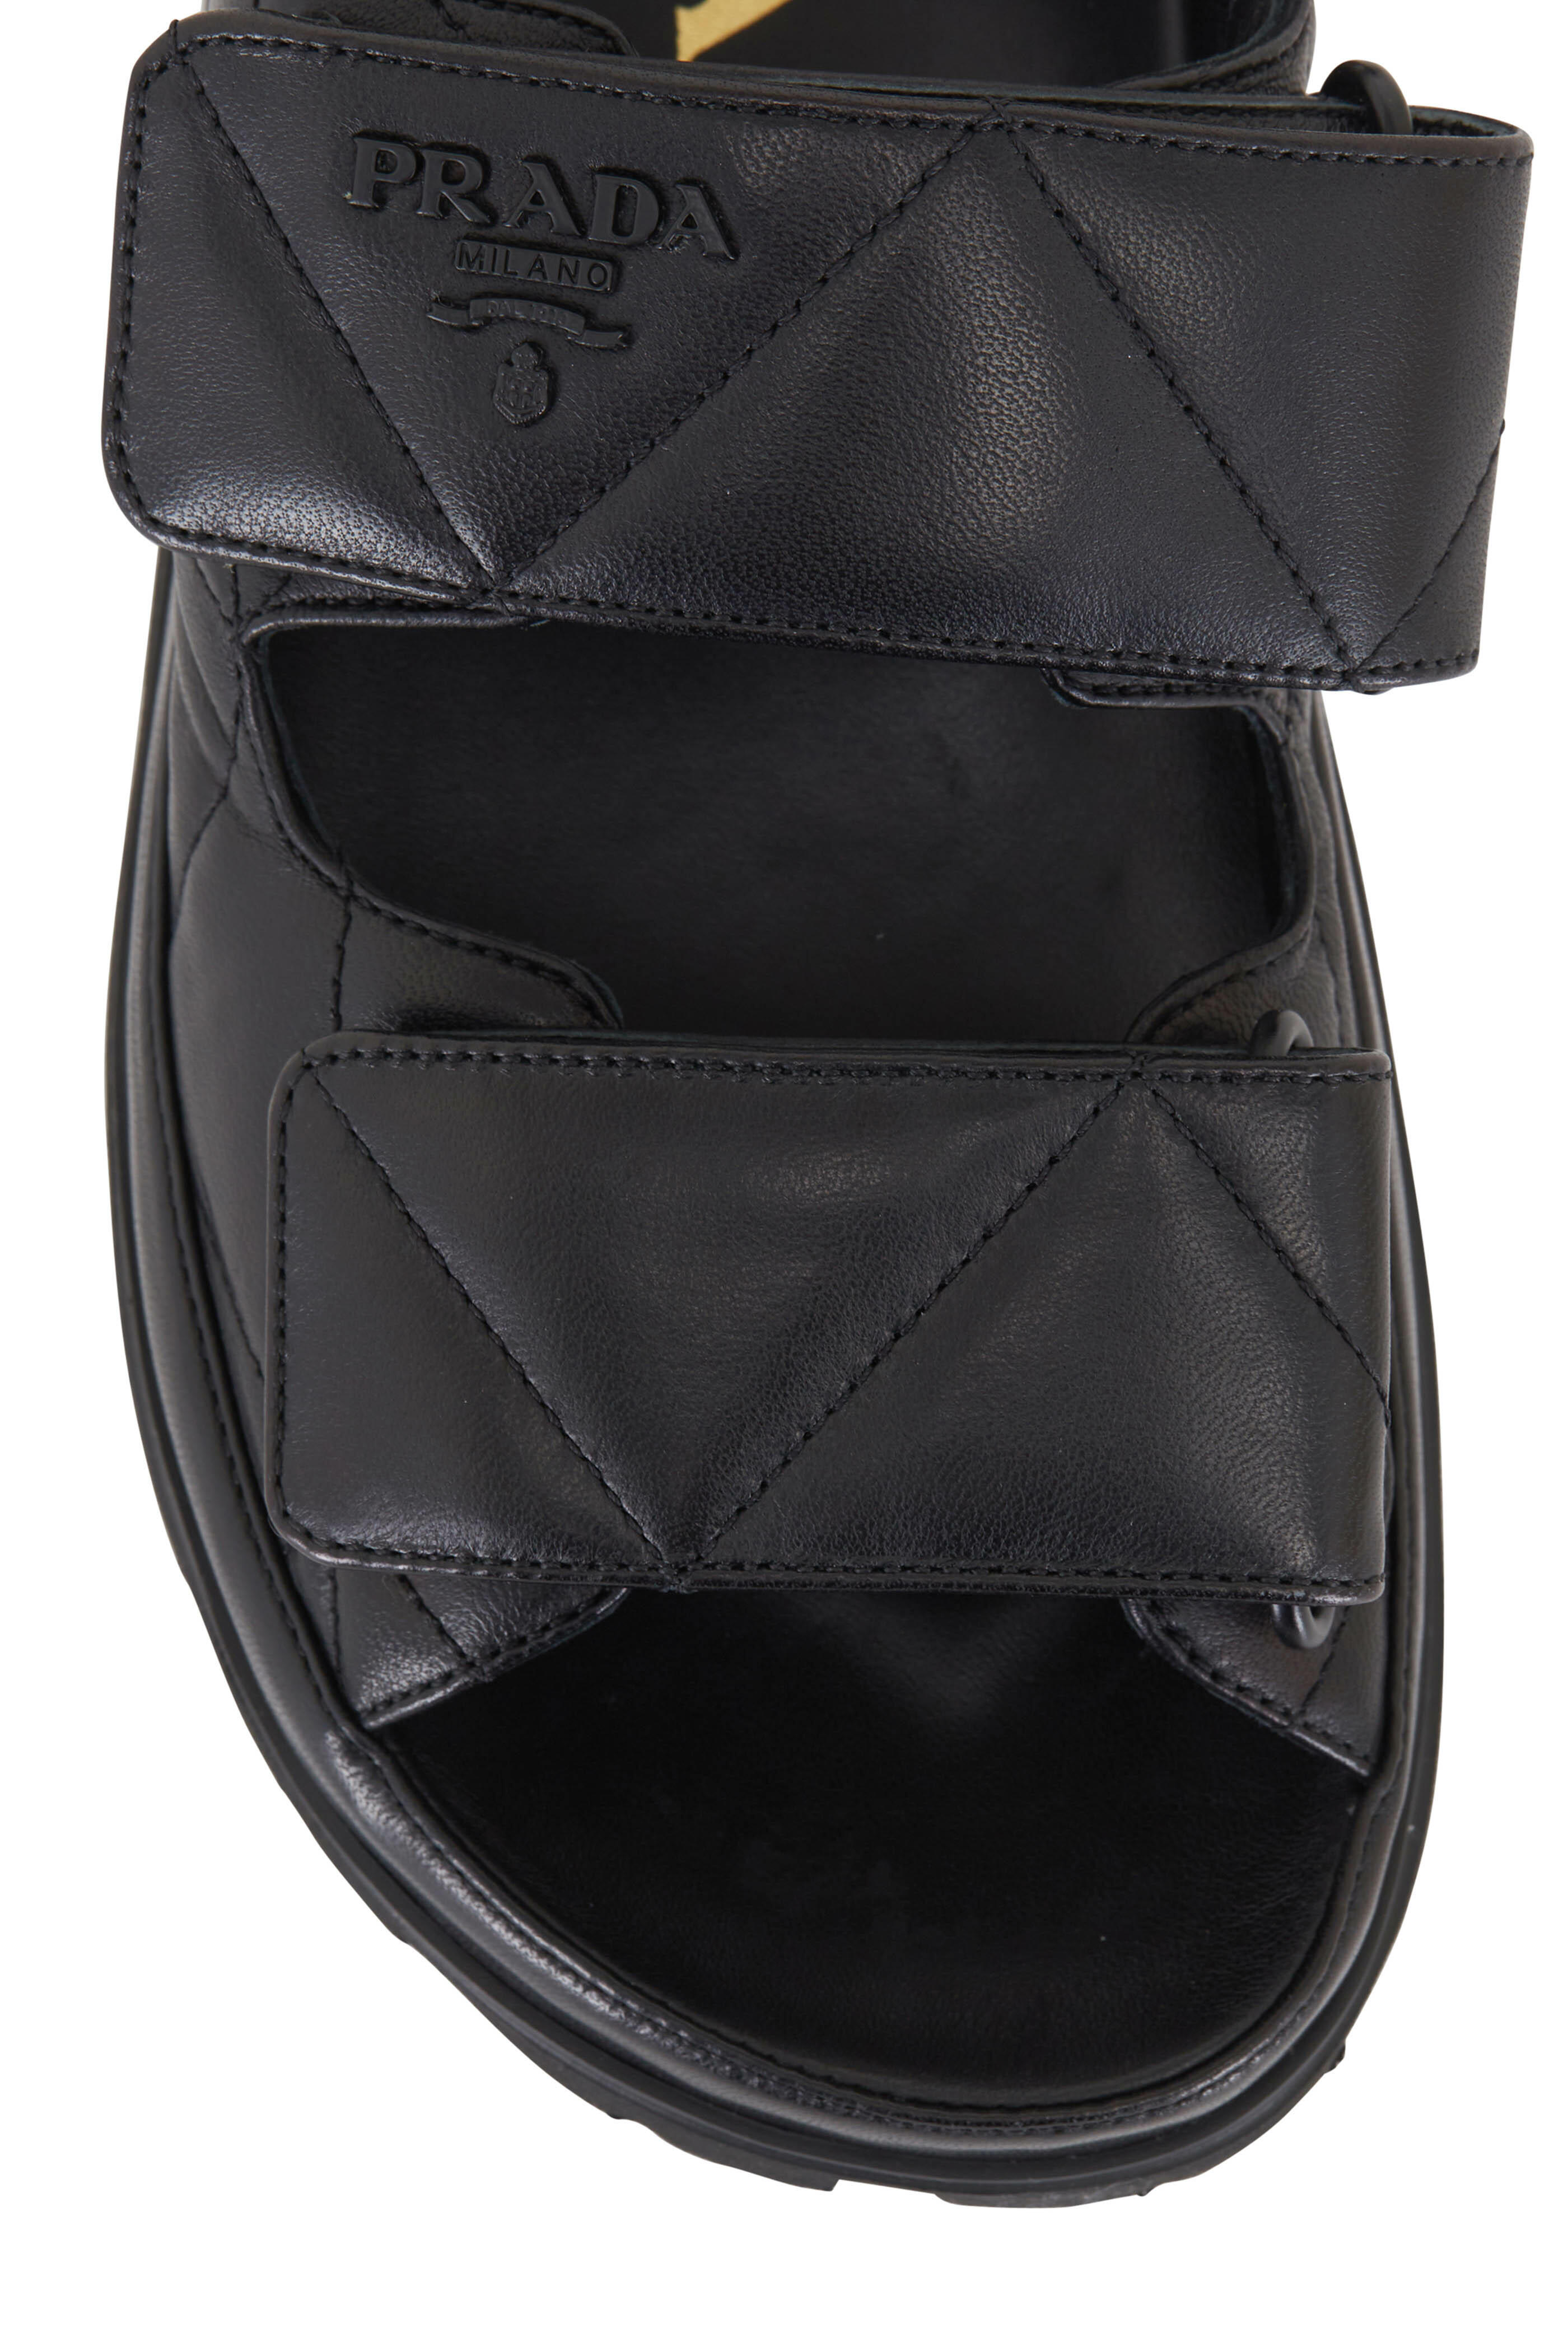 Prada - Black Padded Leather Double Strap Sandal, 20mm